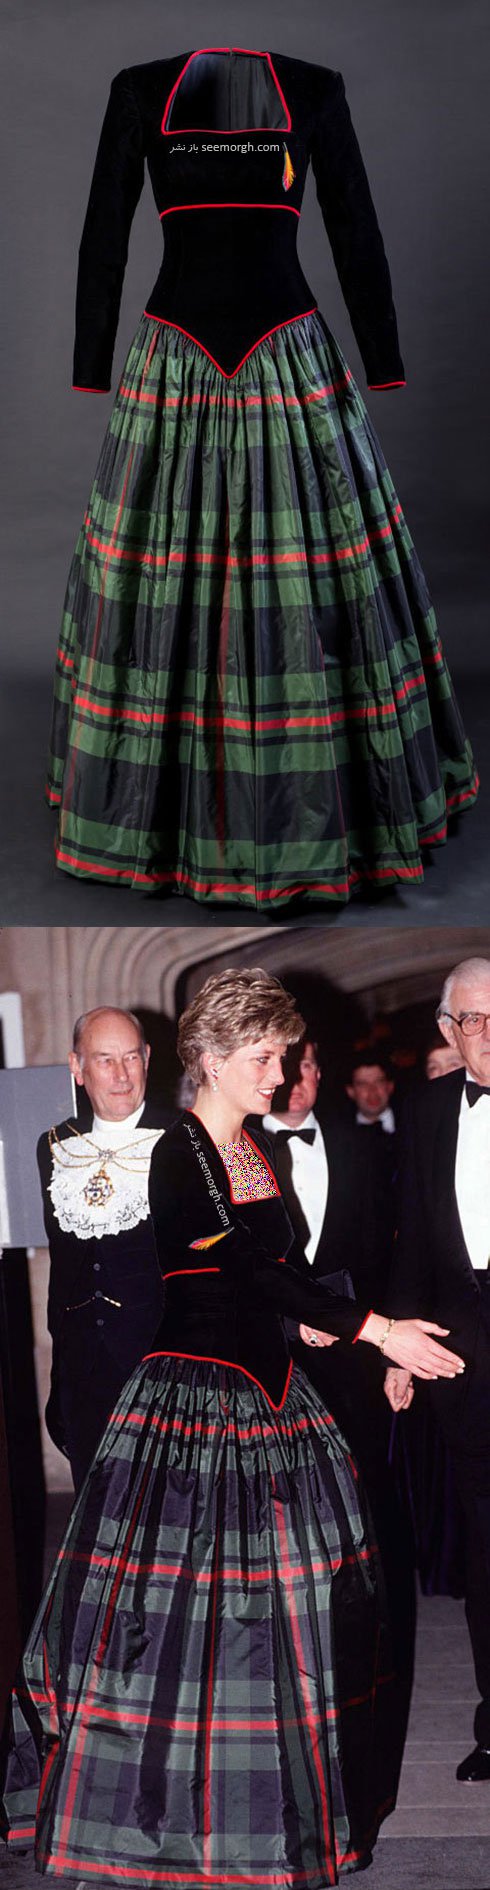 لباس مشکی پرنسس دایانا Diana از طراح معروف کاتری واکر CATHERINE WALKER